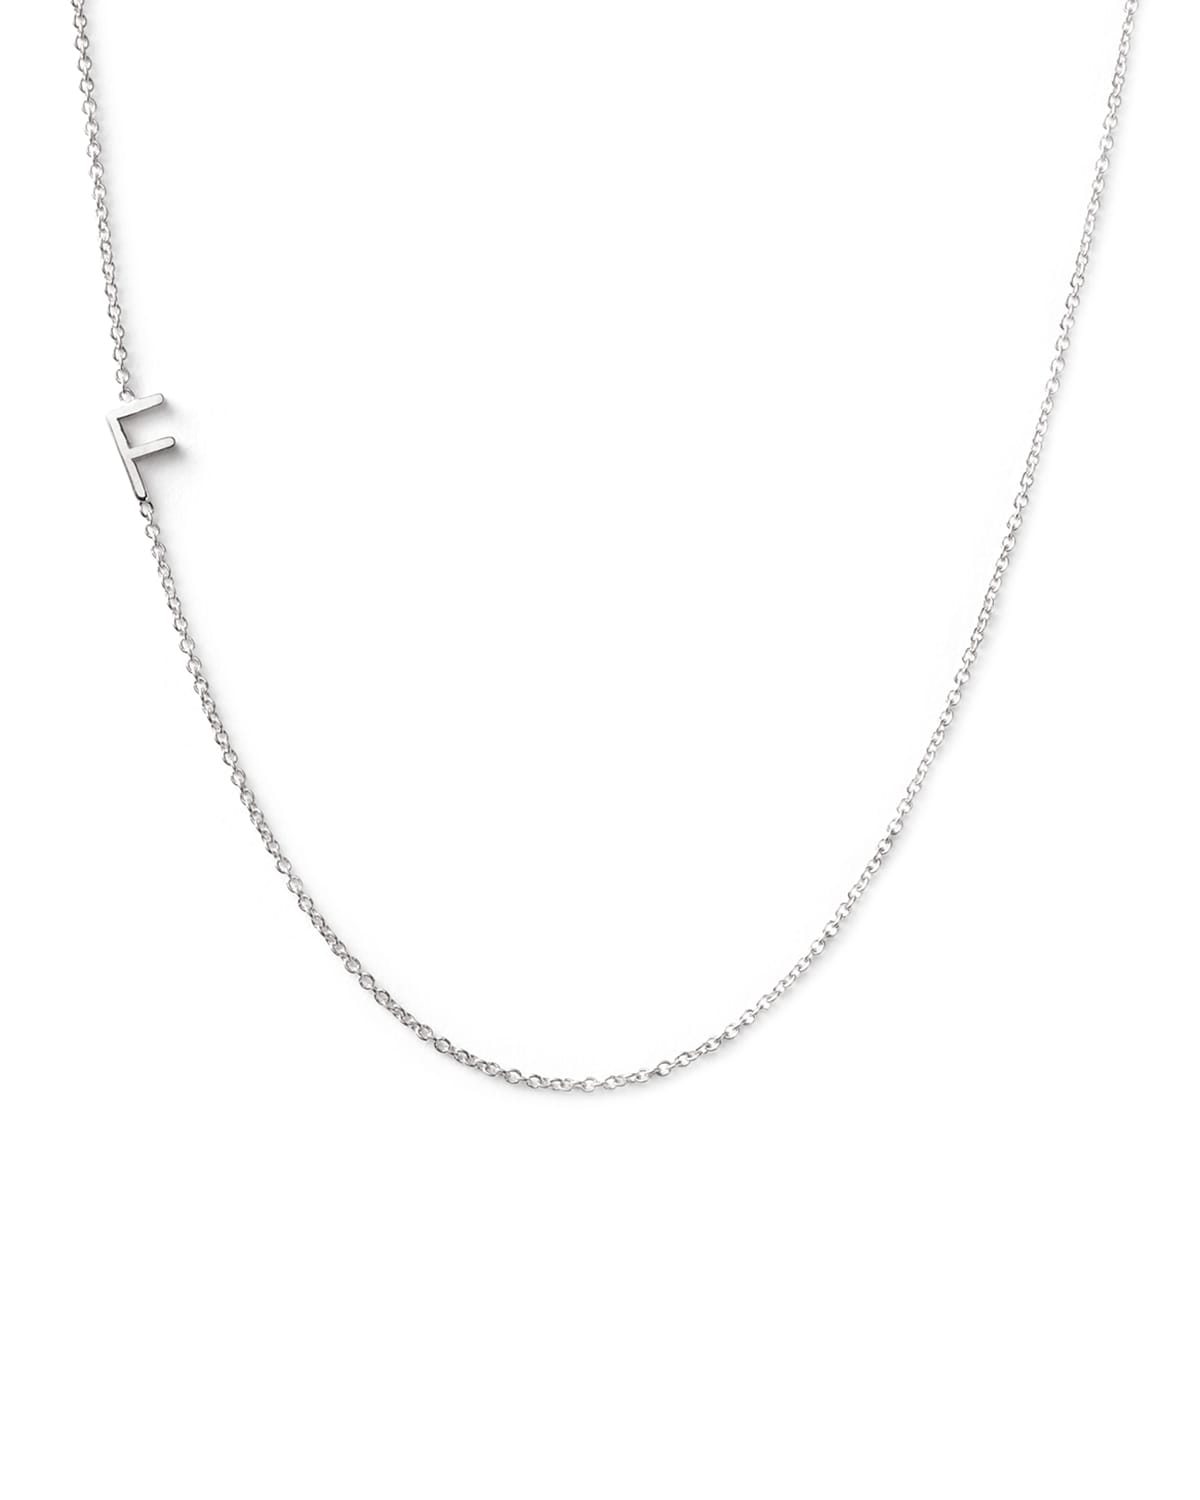 Maya Brenner Designs 14k White Gold Mini Letter Necklace In F